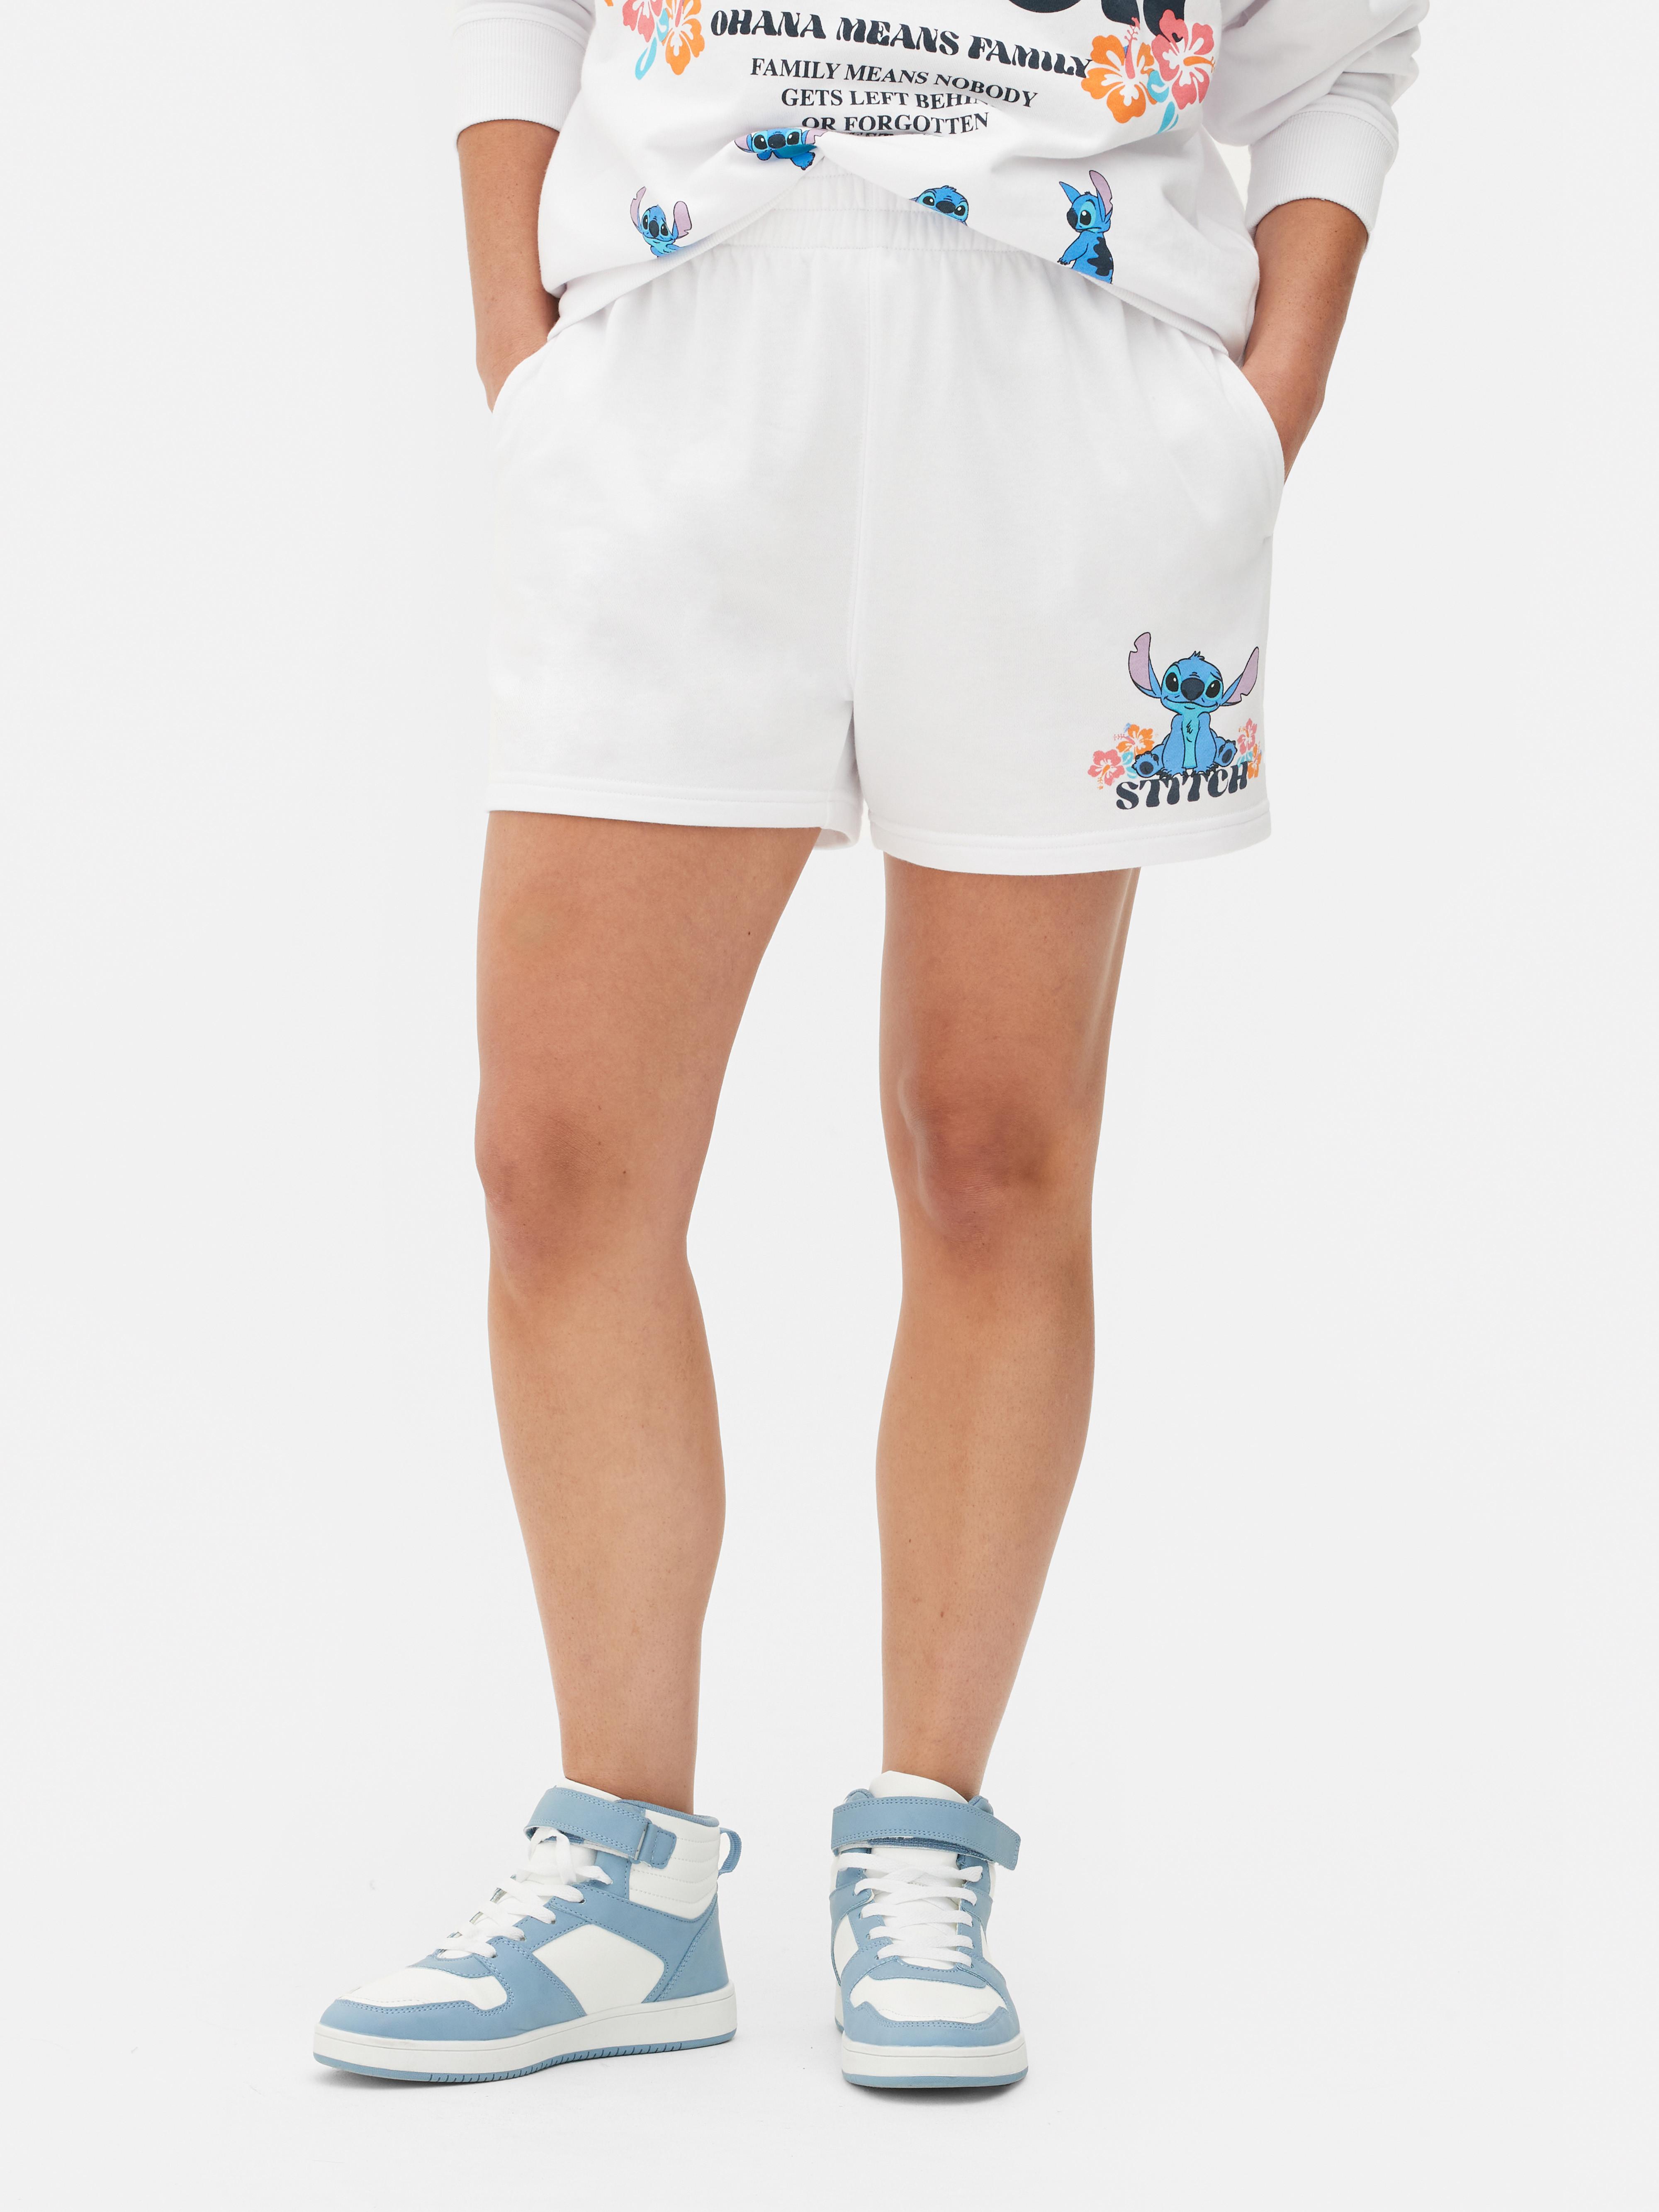 Disney's Lilo & Stitch Elasticated Shorts